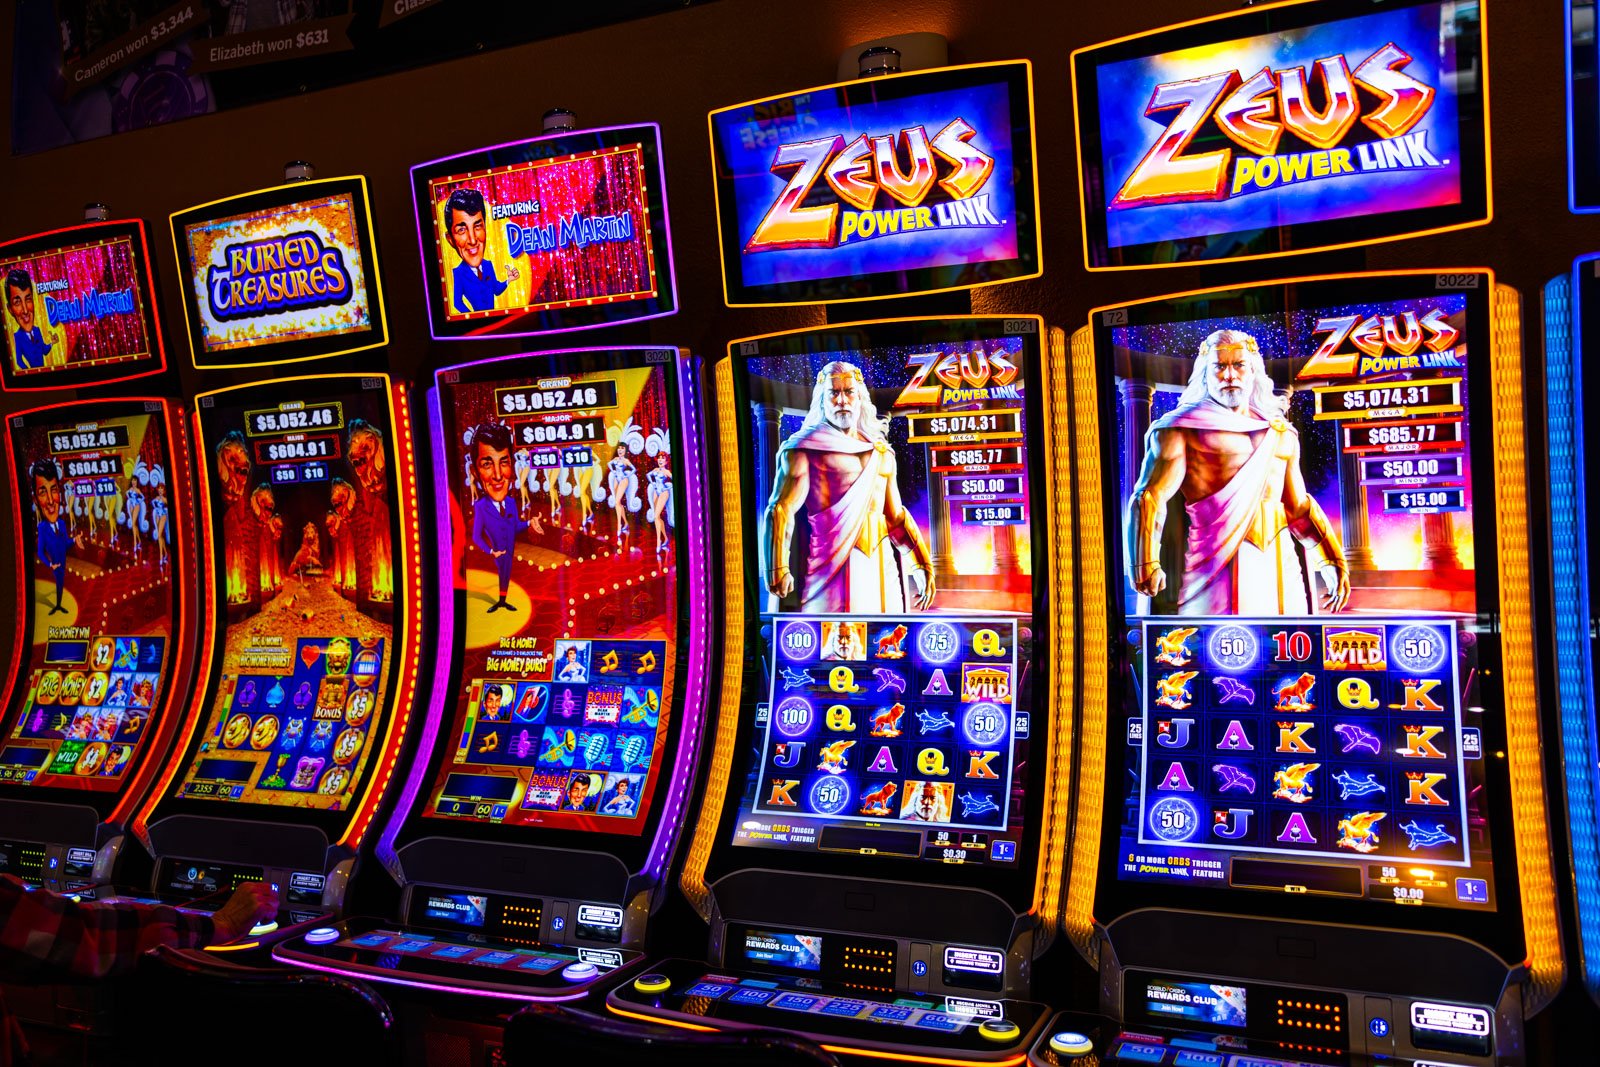 rosebud-casino-gaming-floor-slot-machines-near-valentine-nebraska-14.jpg